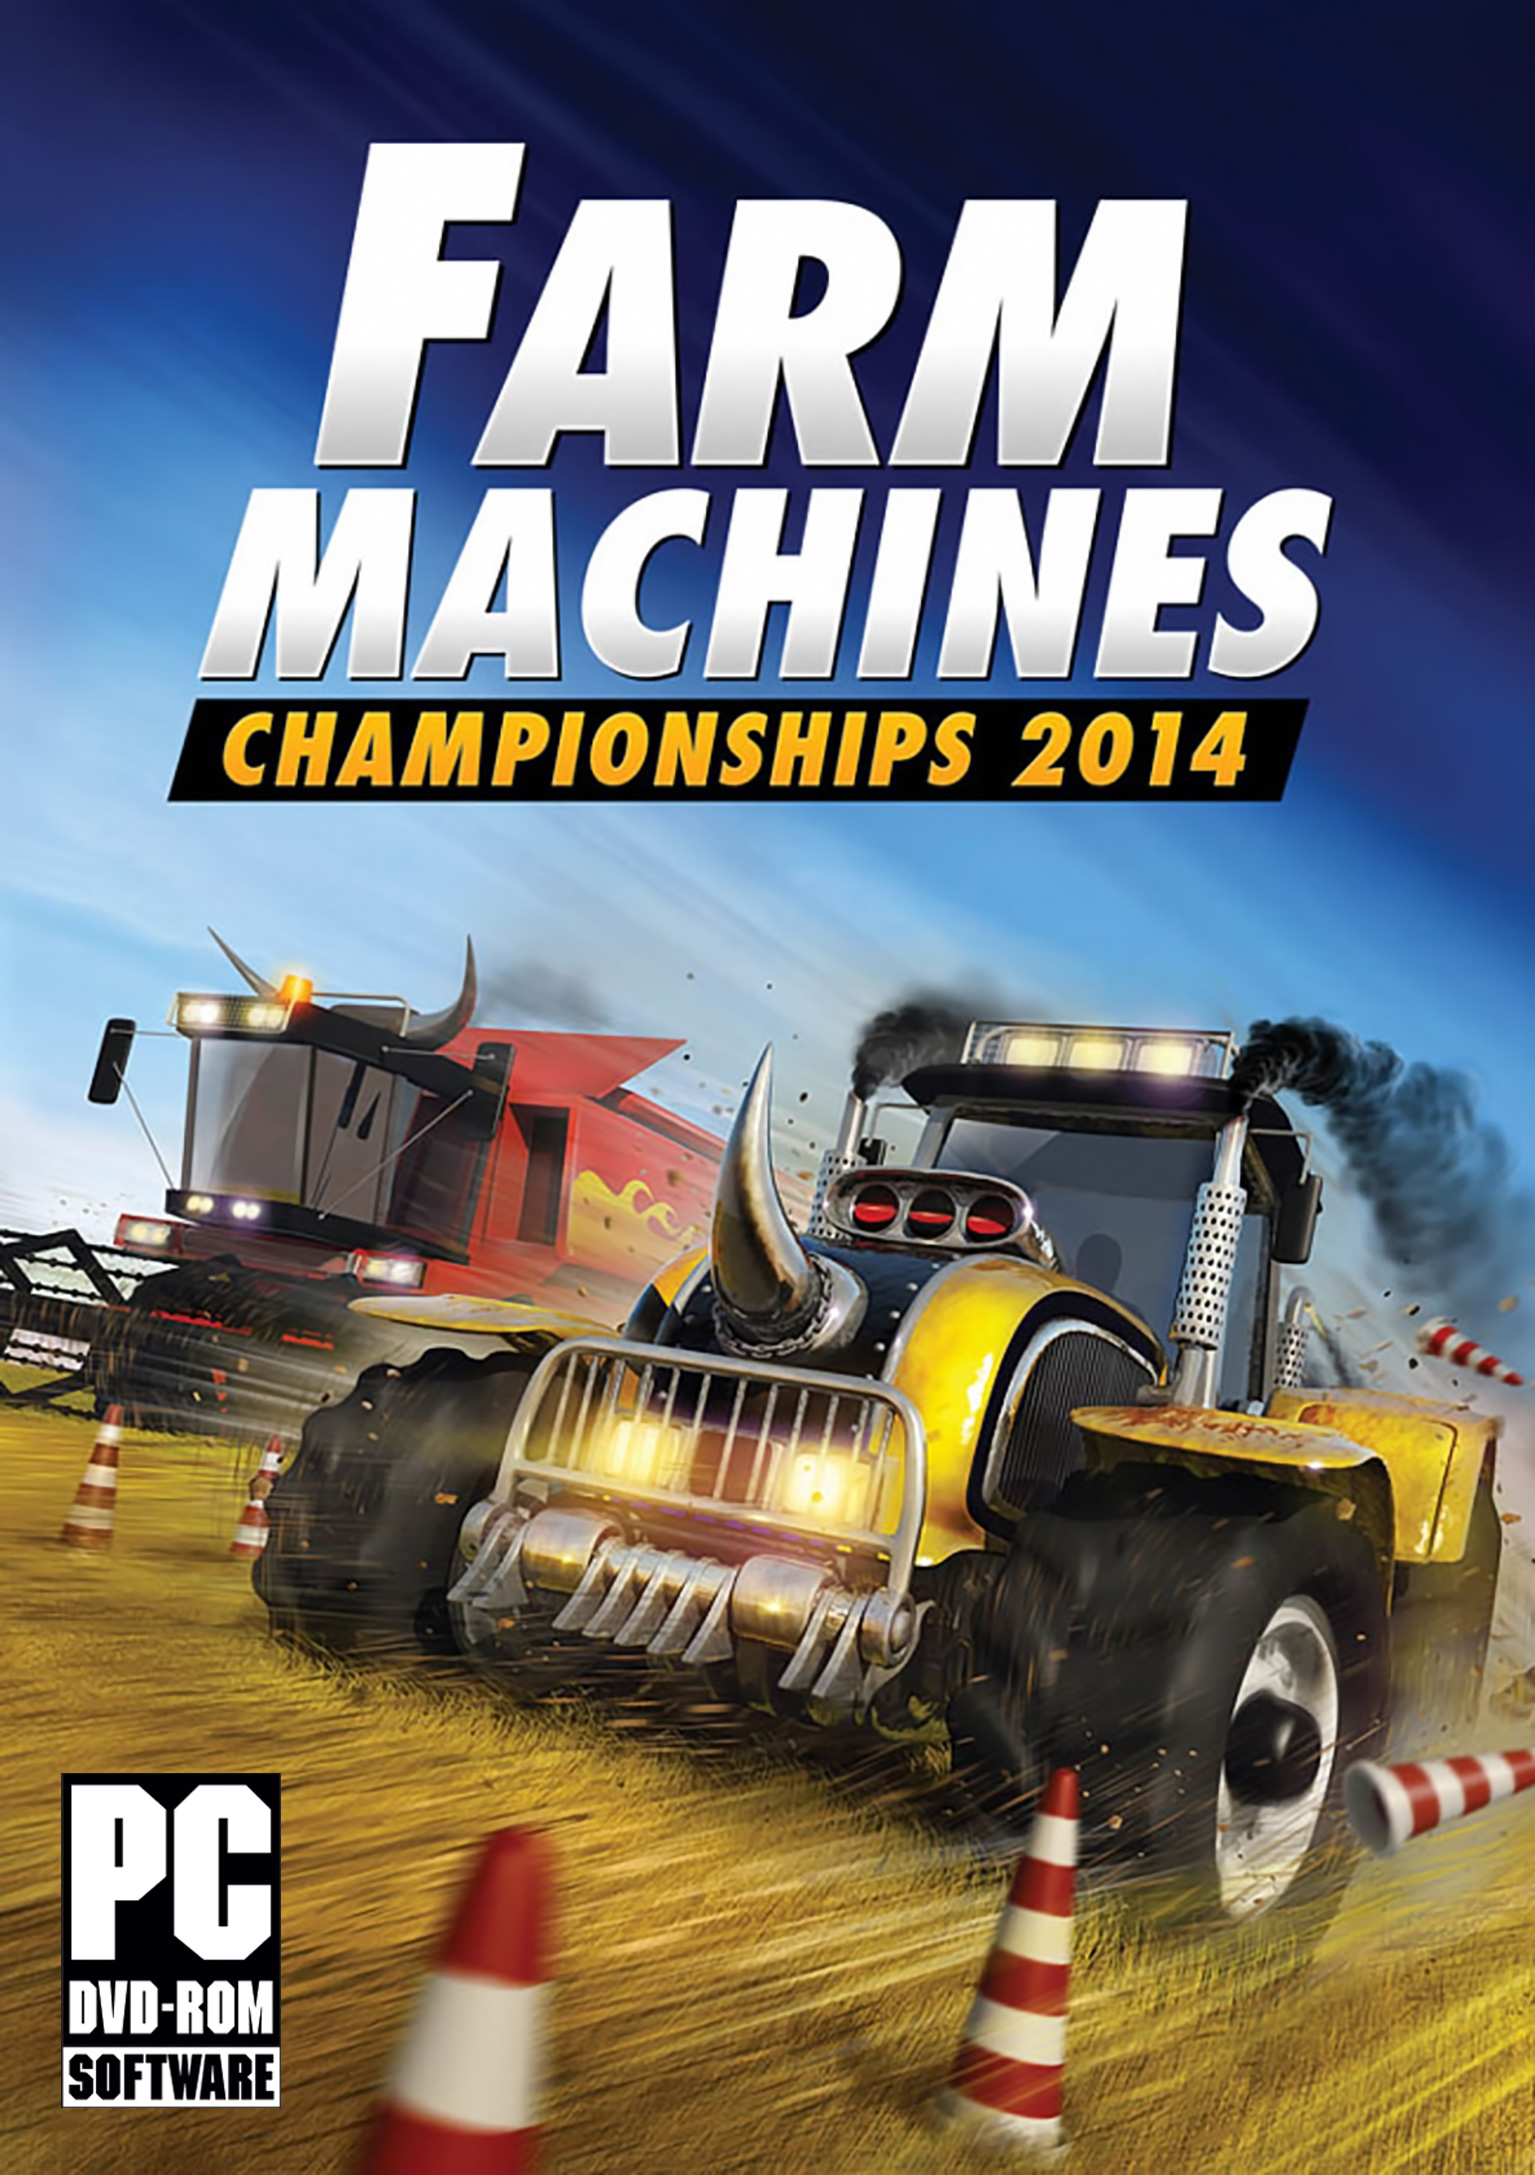 Farm Machines Championships 2014 - pedn DVD obal 2